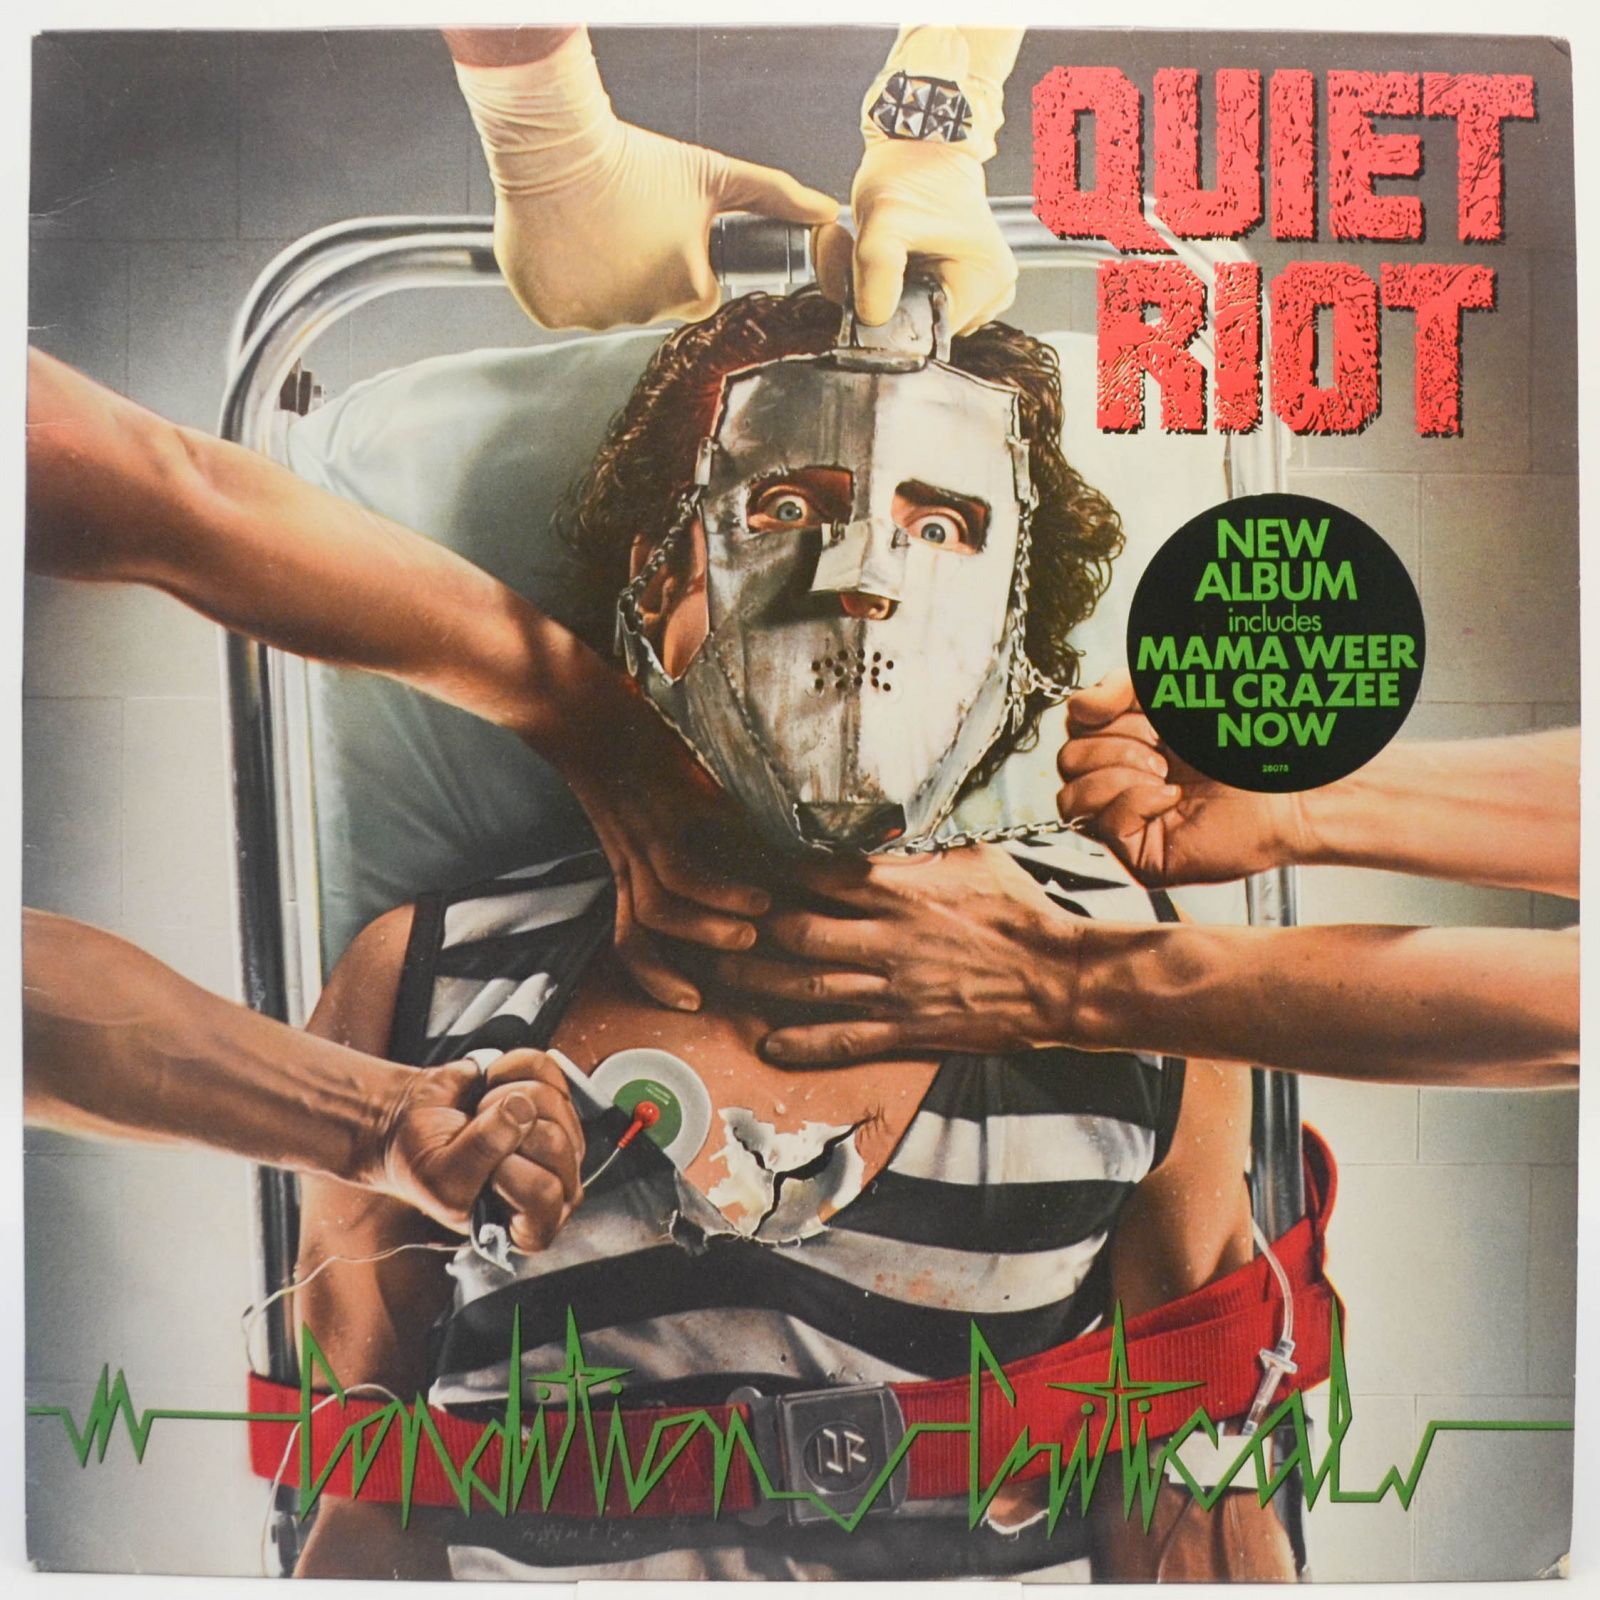 Quiet Riot — Condition Critical, 1984